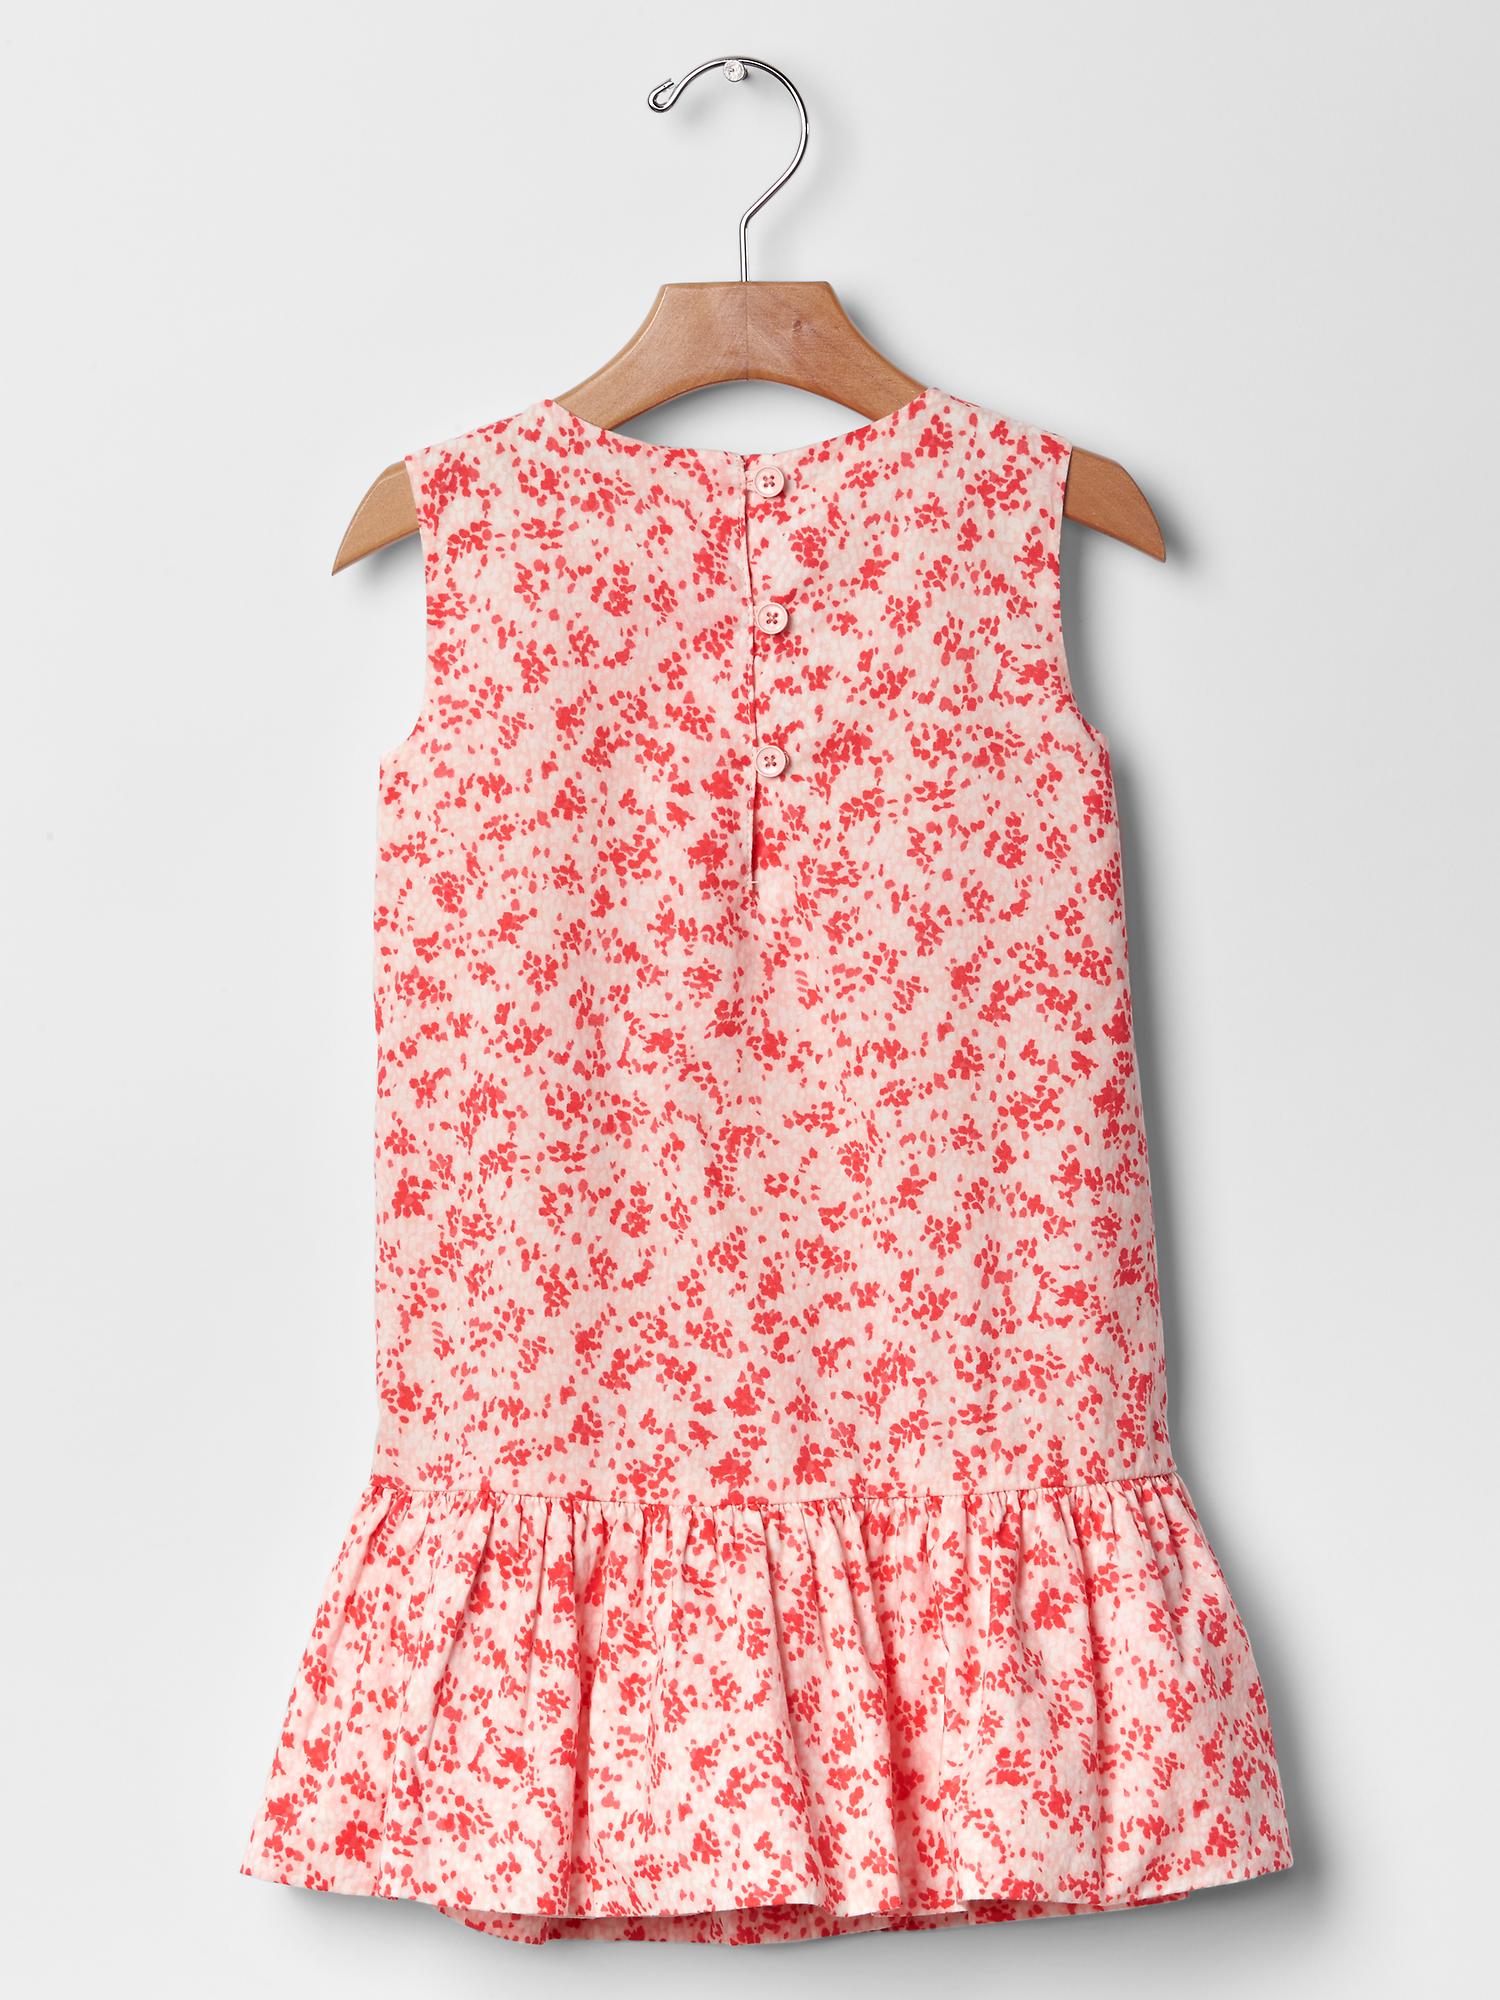 Speckled side-pleat dress | Gap